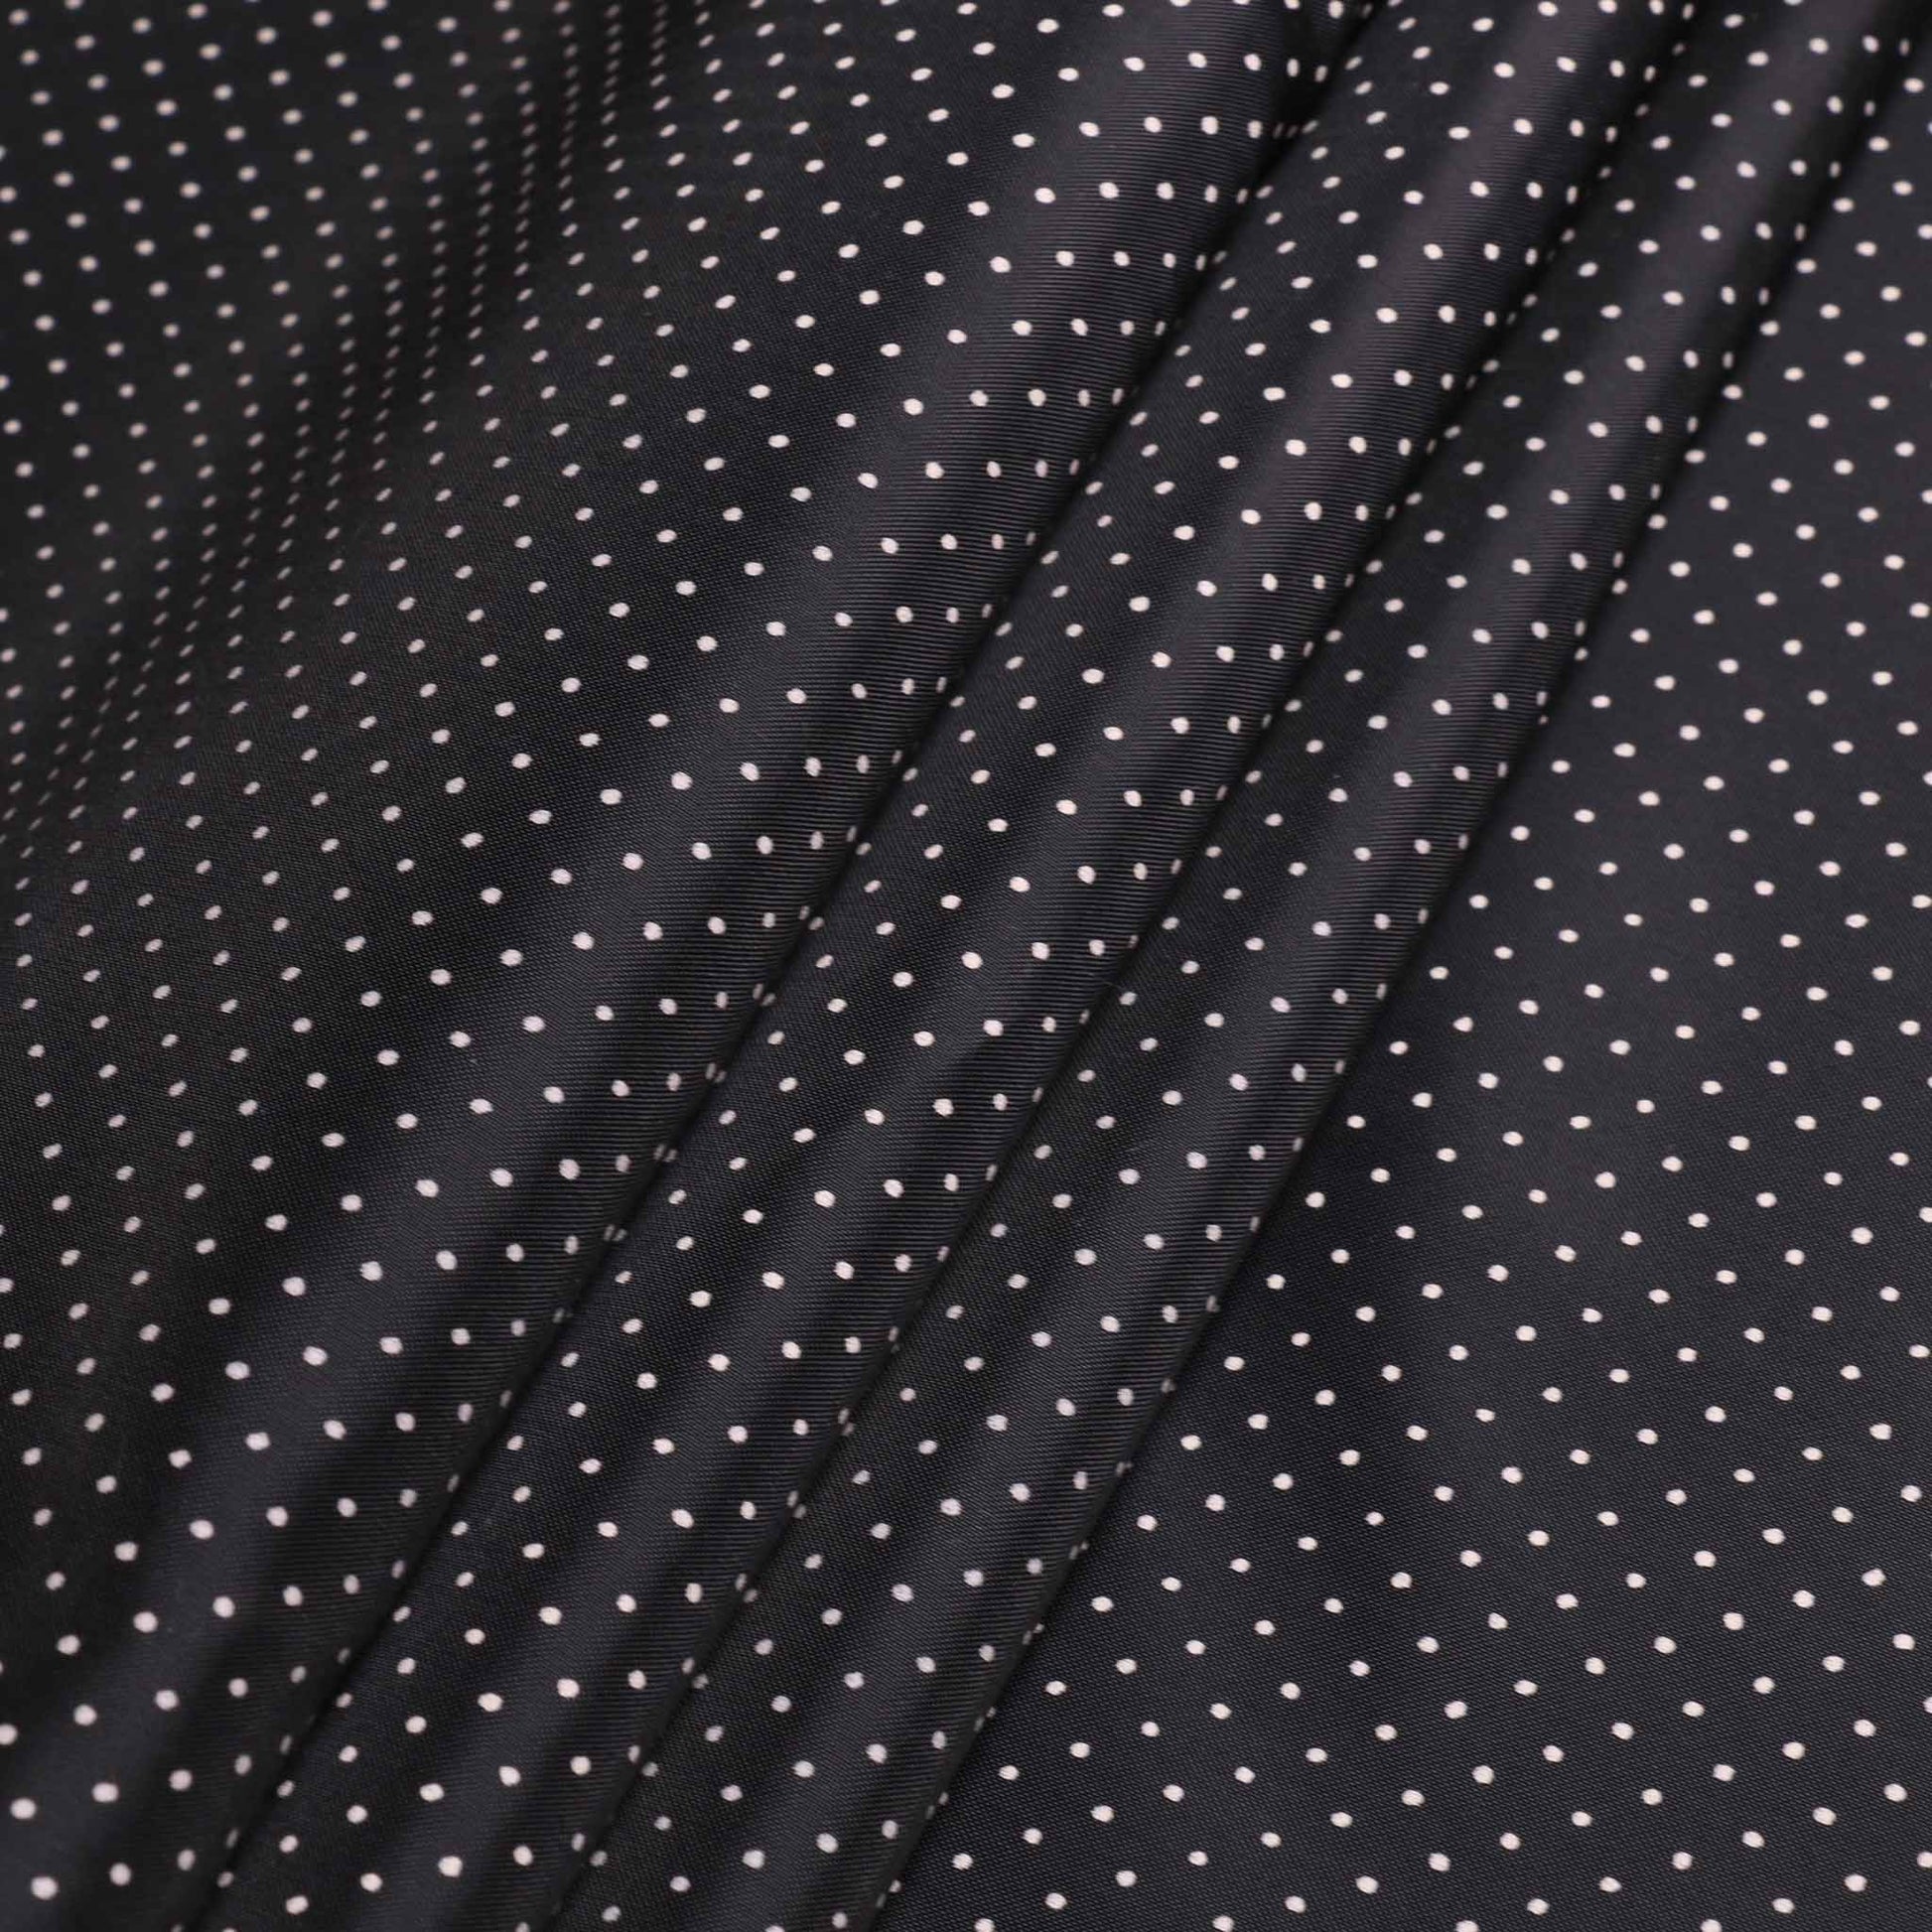 Pin on Fabric design